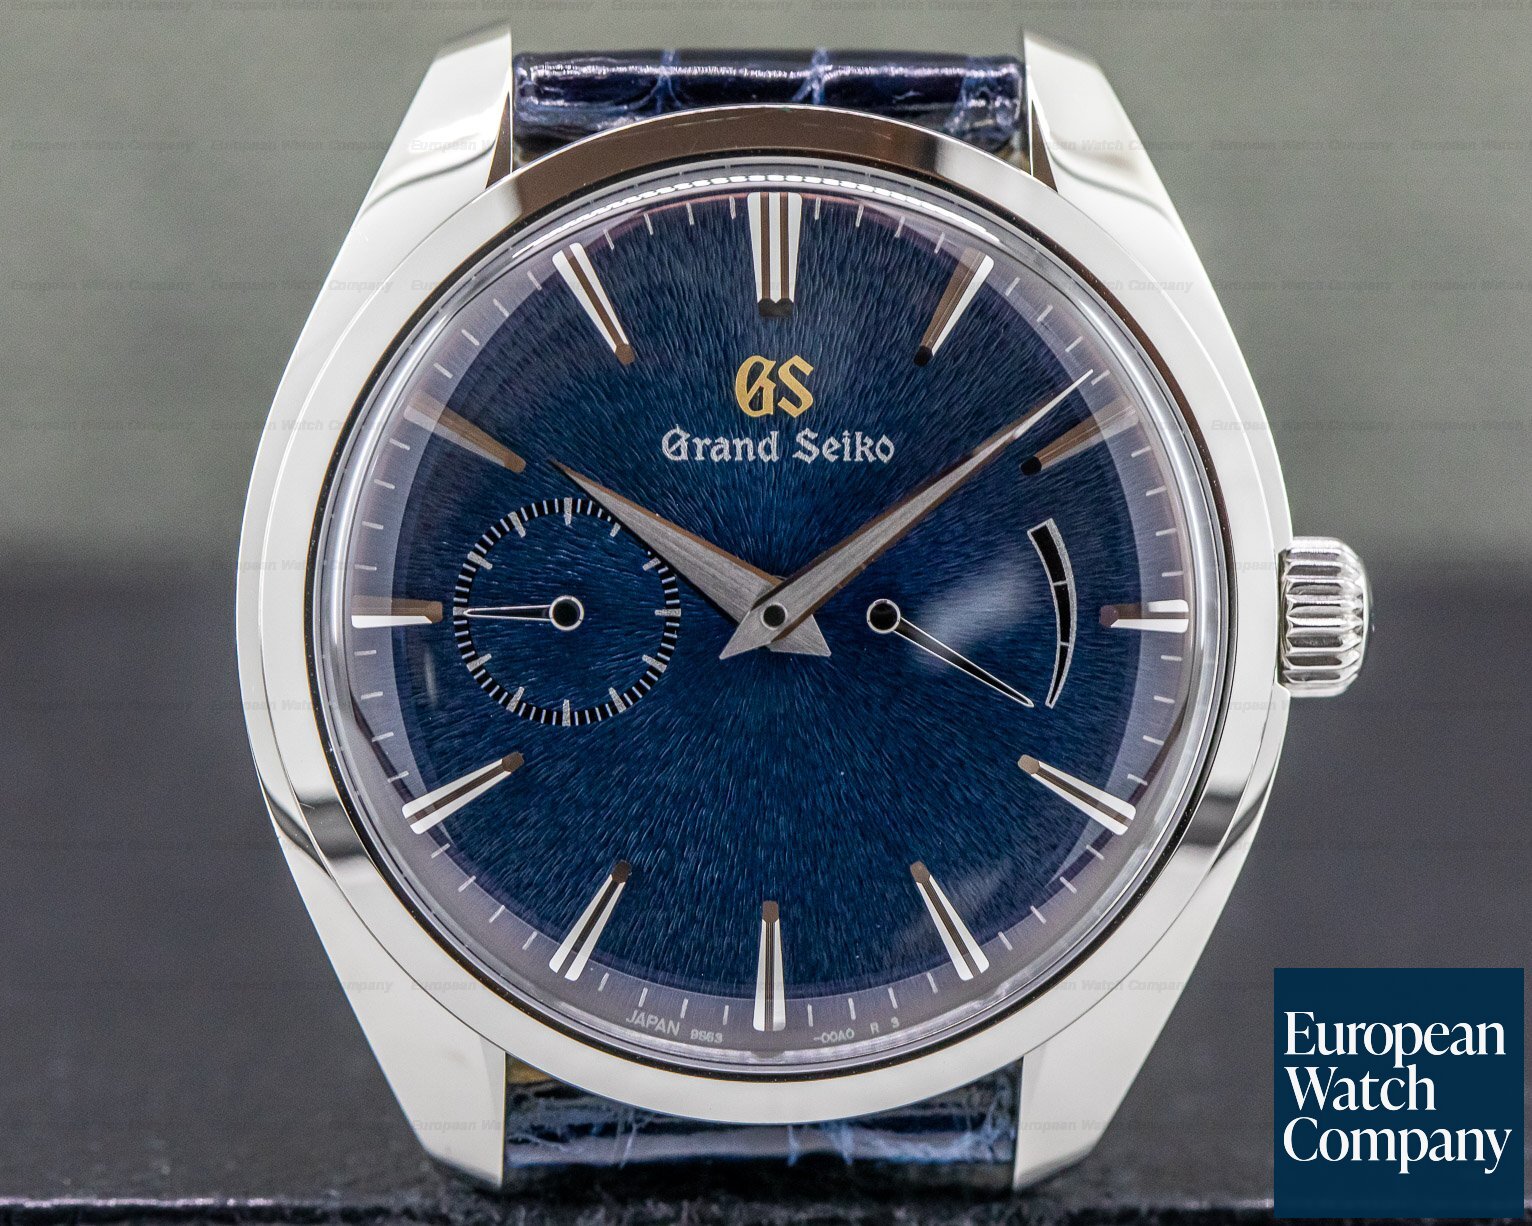 Grand Seiko SBGK005 Grand Seiko Elegance Collection Limited Edition (32686)  | European Watch Co.